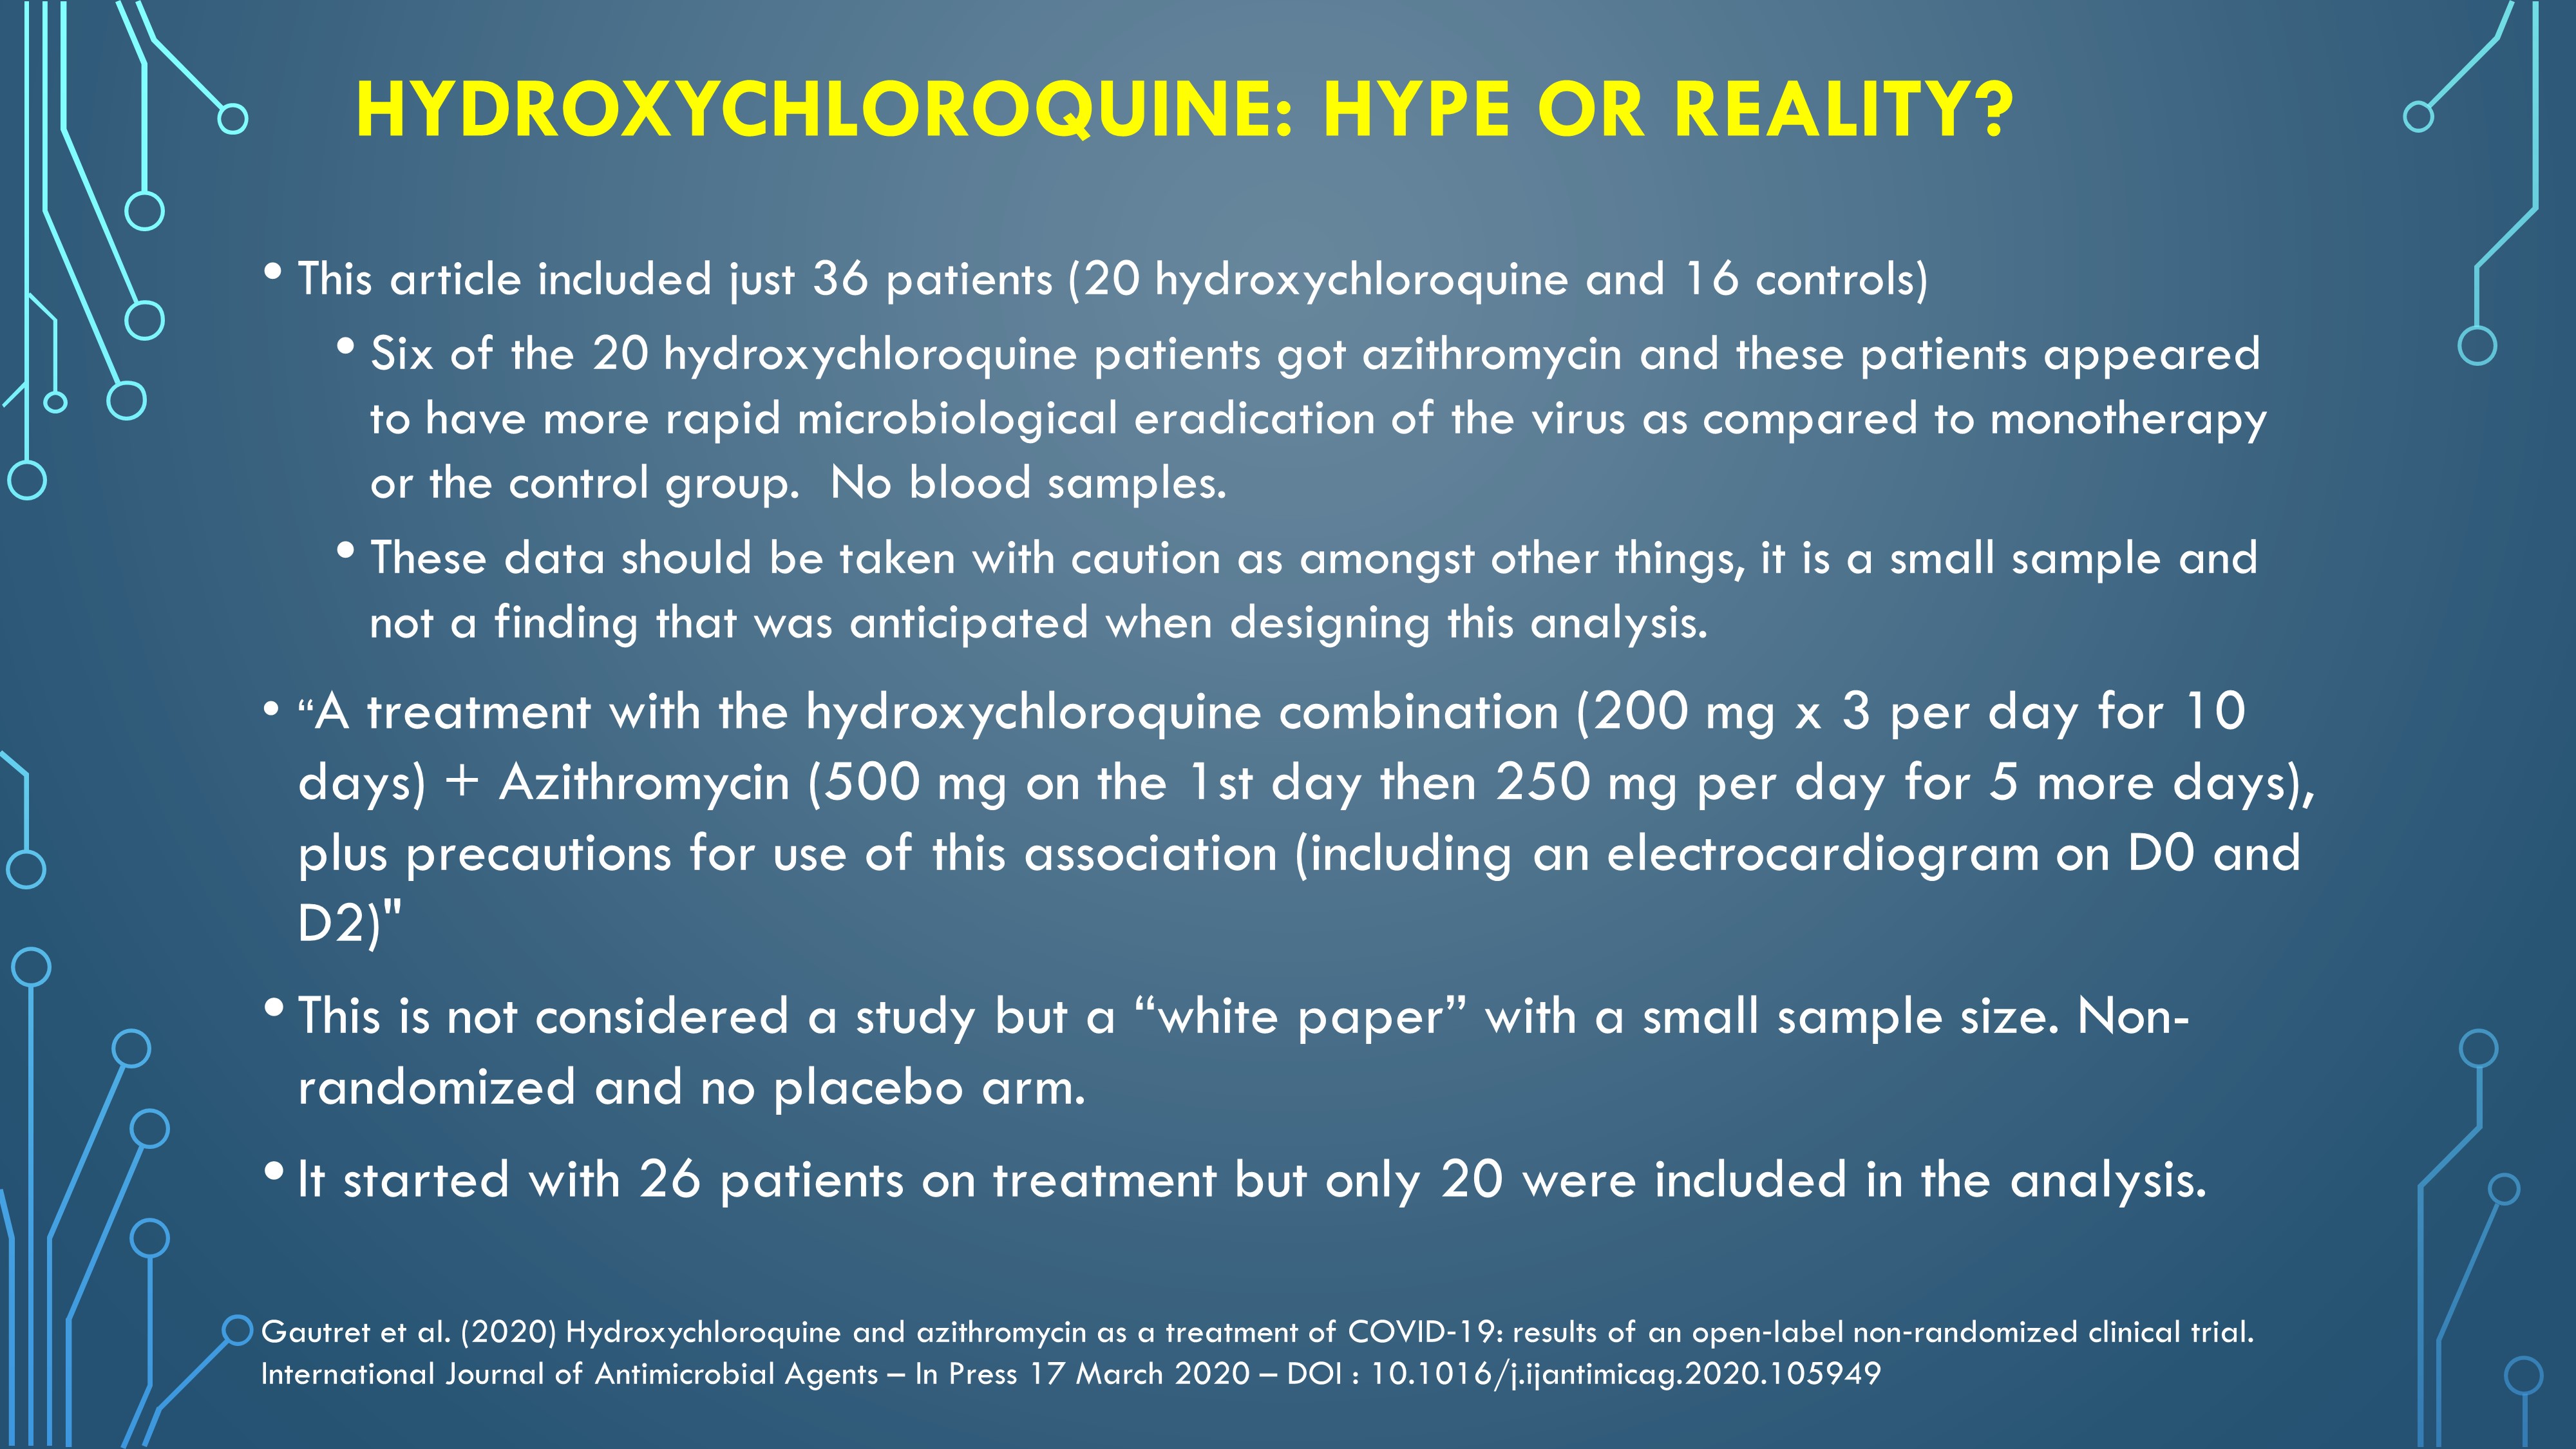 hyroxychloroquine hype or reality.JPG